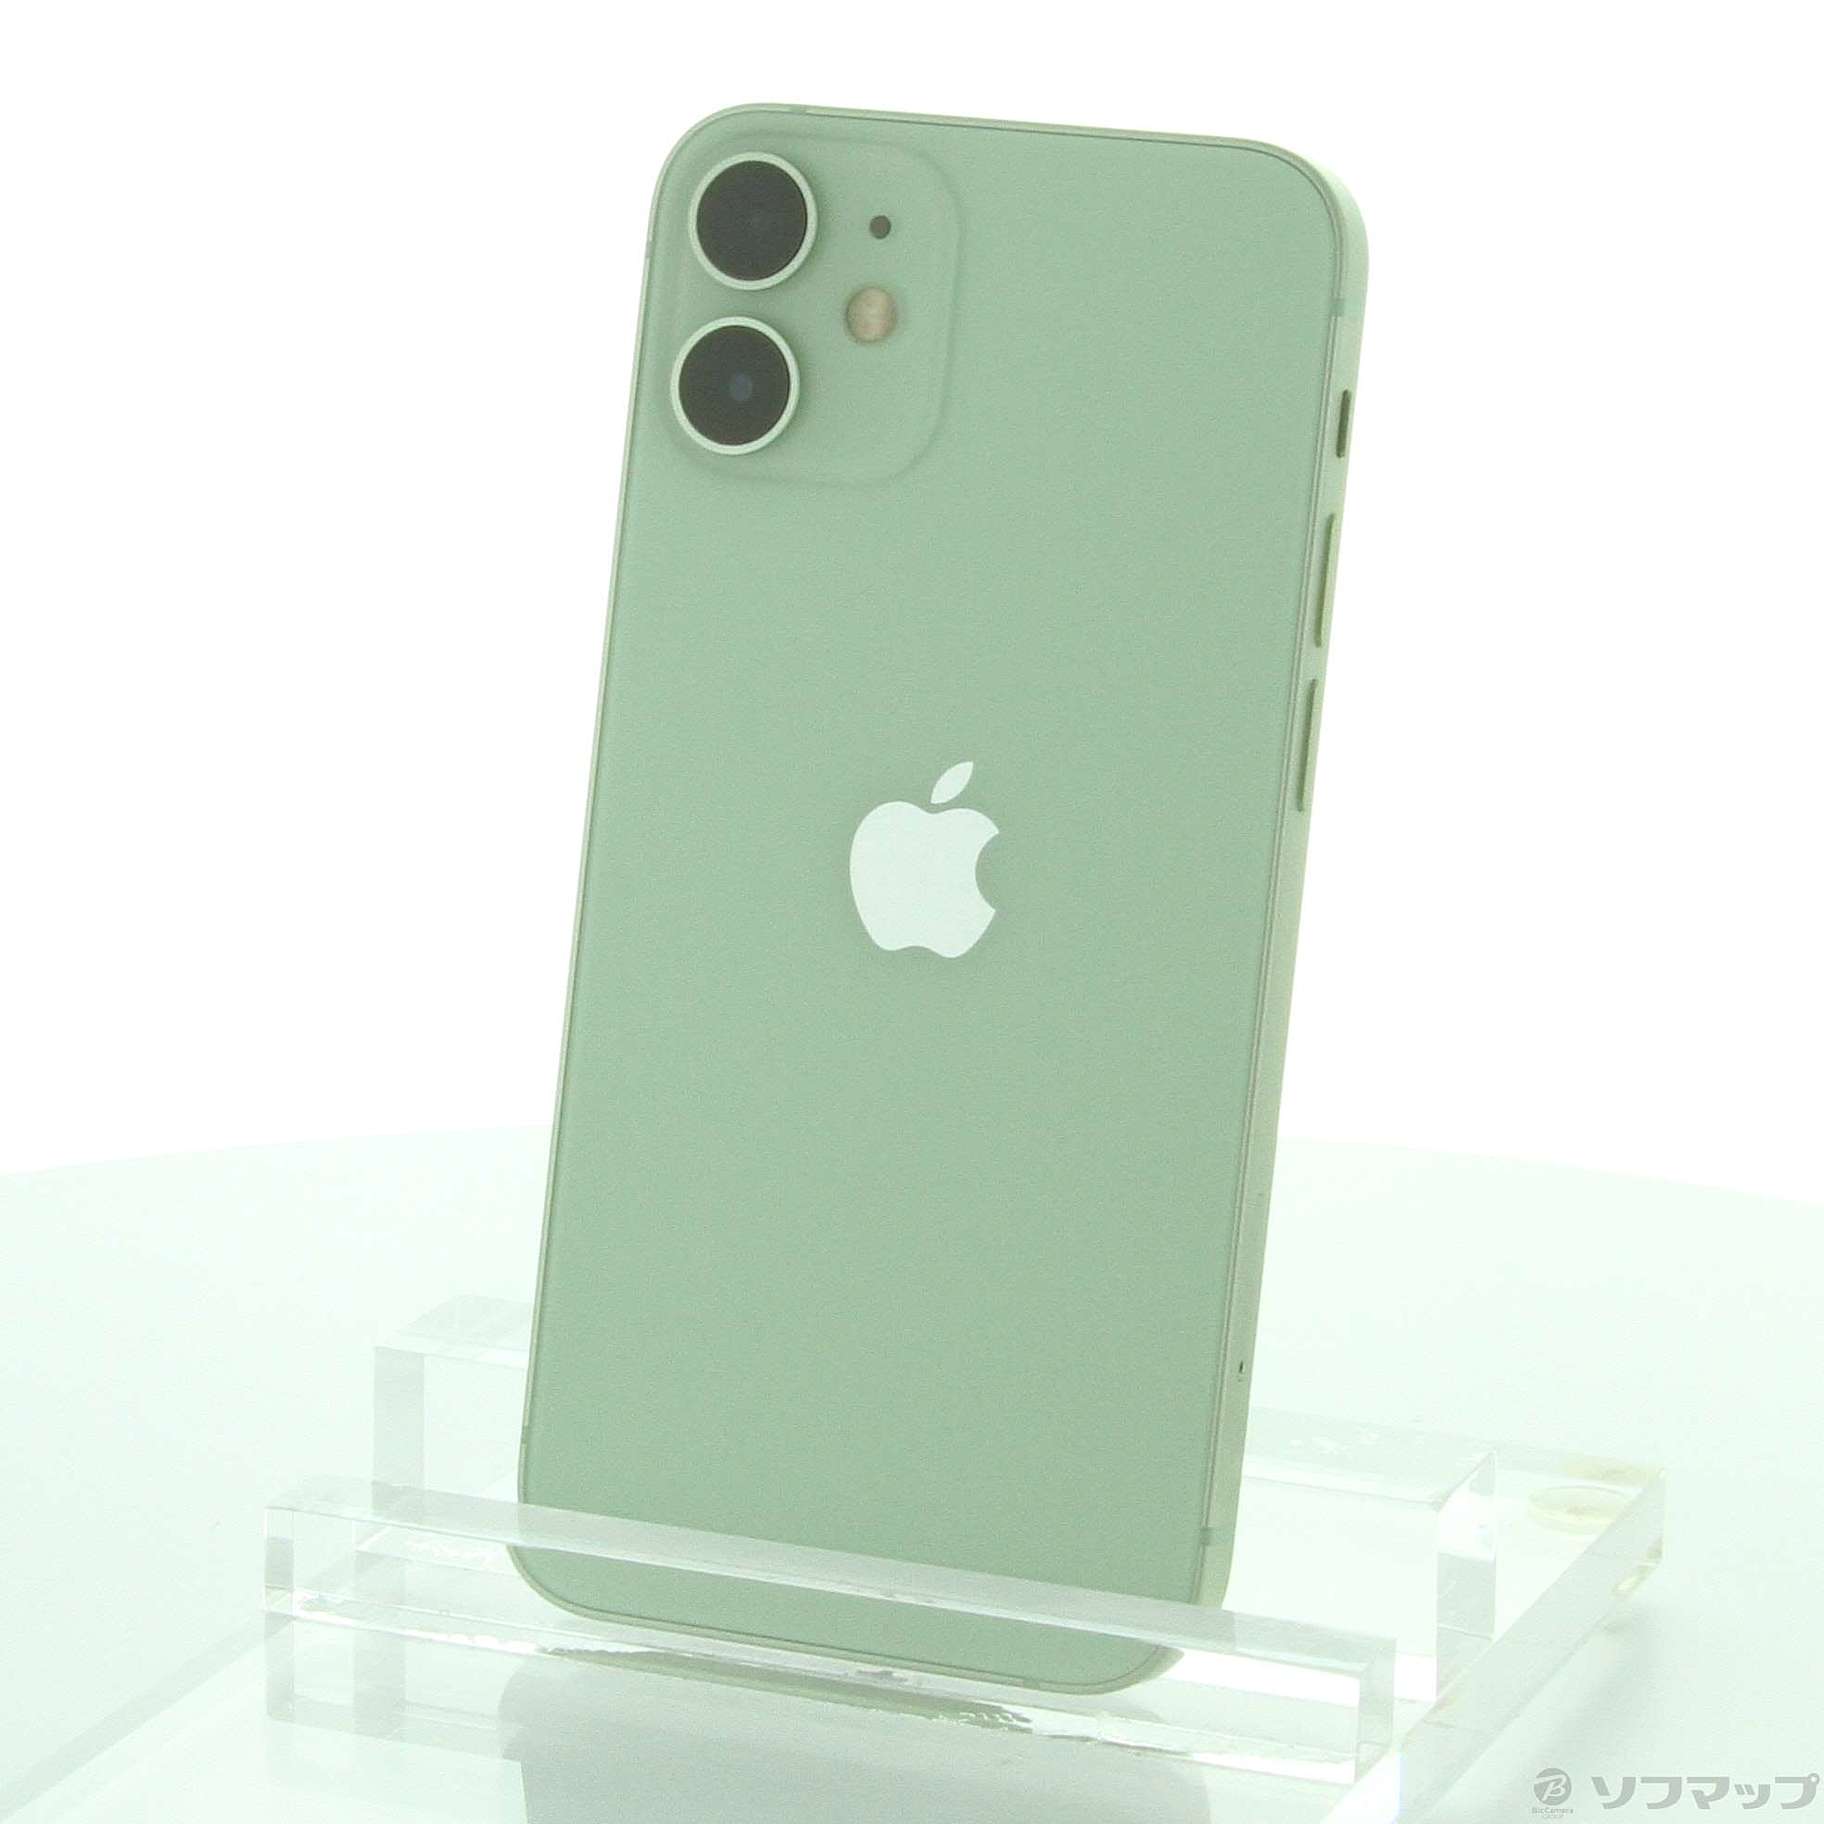 【新品未開封】iPhone 12 mini 64GB 緑 SIMフリー